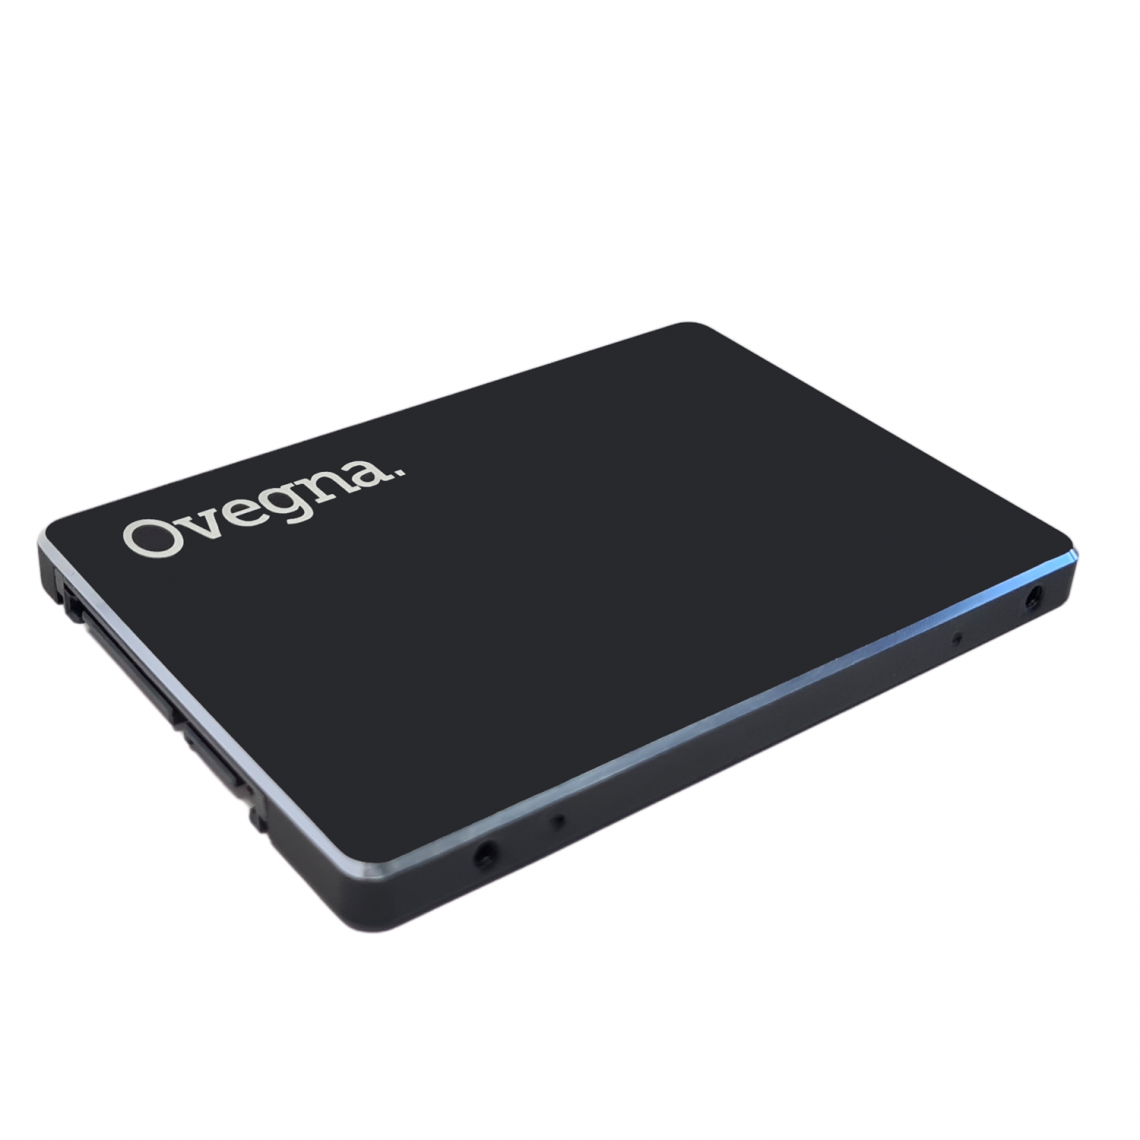 Ovegna - Ovegna SD1: Disque SSD Flash Interne 2.5 Pouces Haute Performance, 1 to, 3D NAND Flash, SATA III 6 Go/s,Jusqu’à 540 MB/s, Stockage de données(128 GB) - SSD Interne